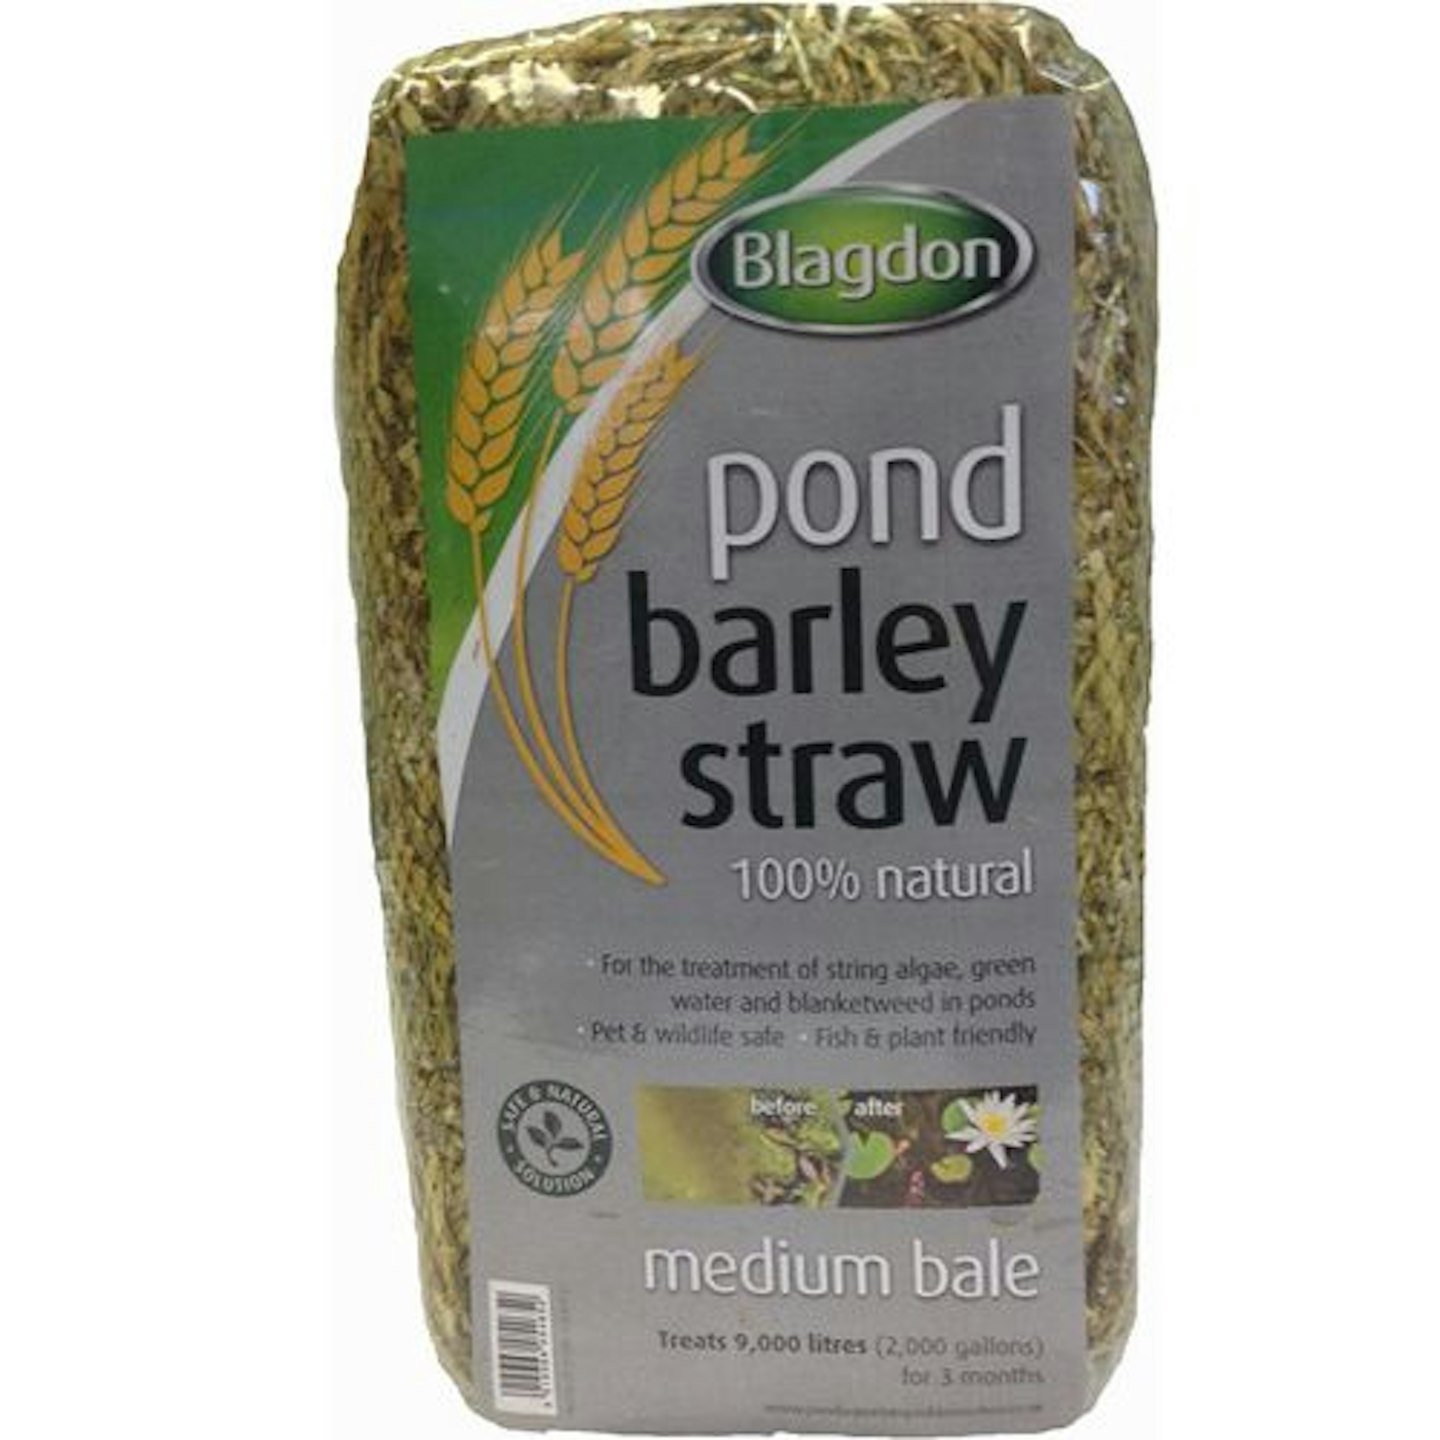 pond barley straw